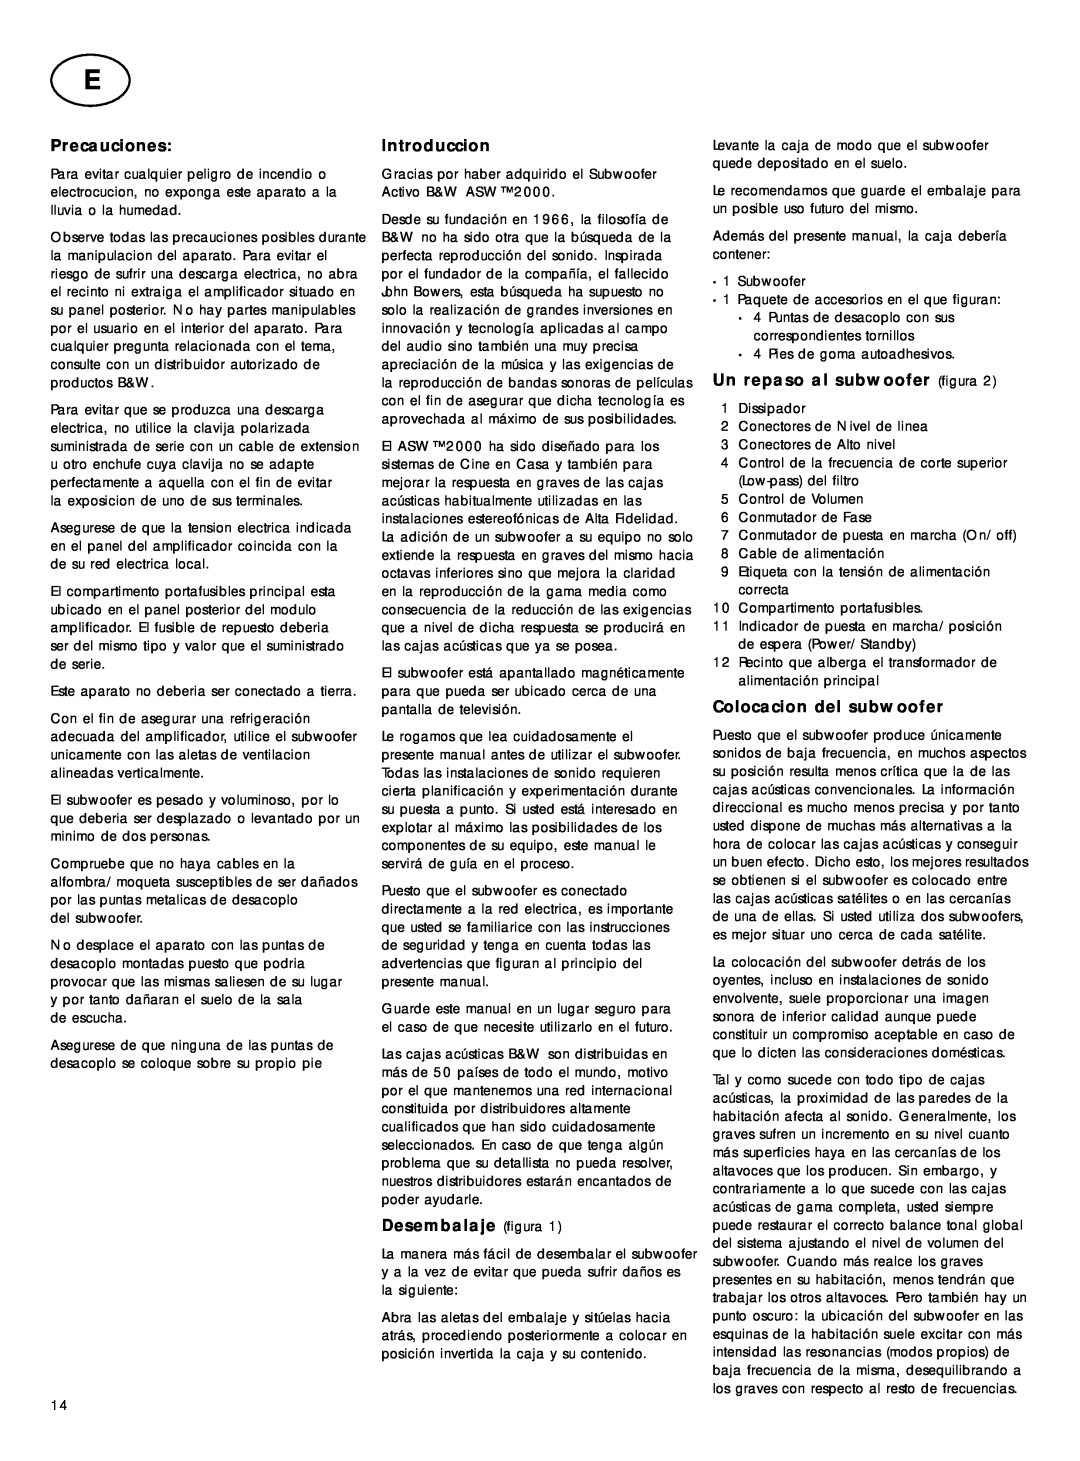 Bowers & Wilkins ASW2000 owner manual Precauciones, Introduccion, Desembalaje figura, Un repaso al subwoofer figura 